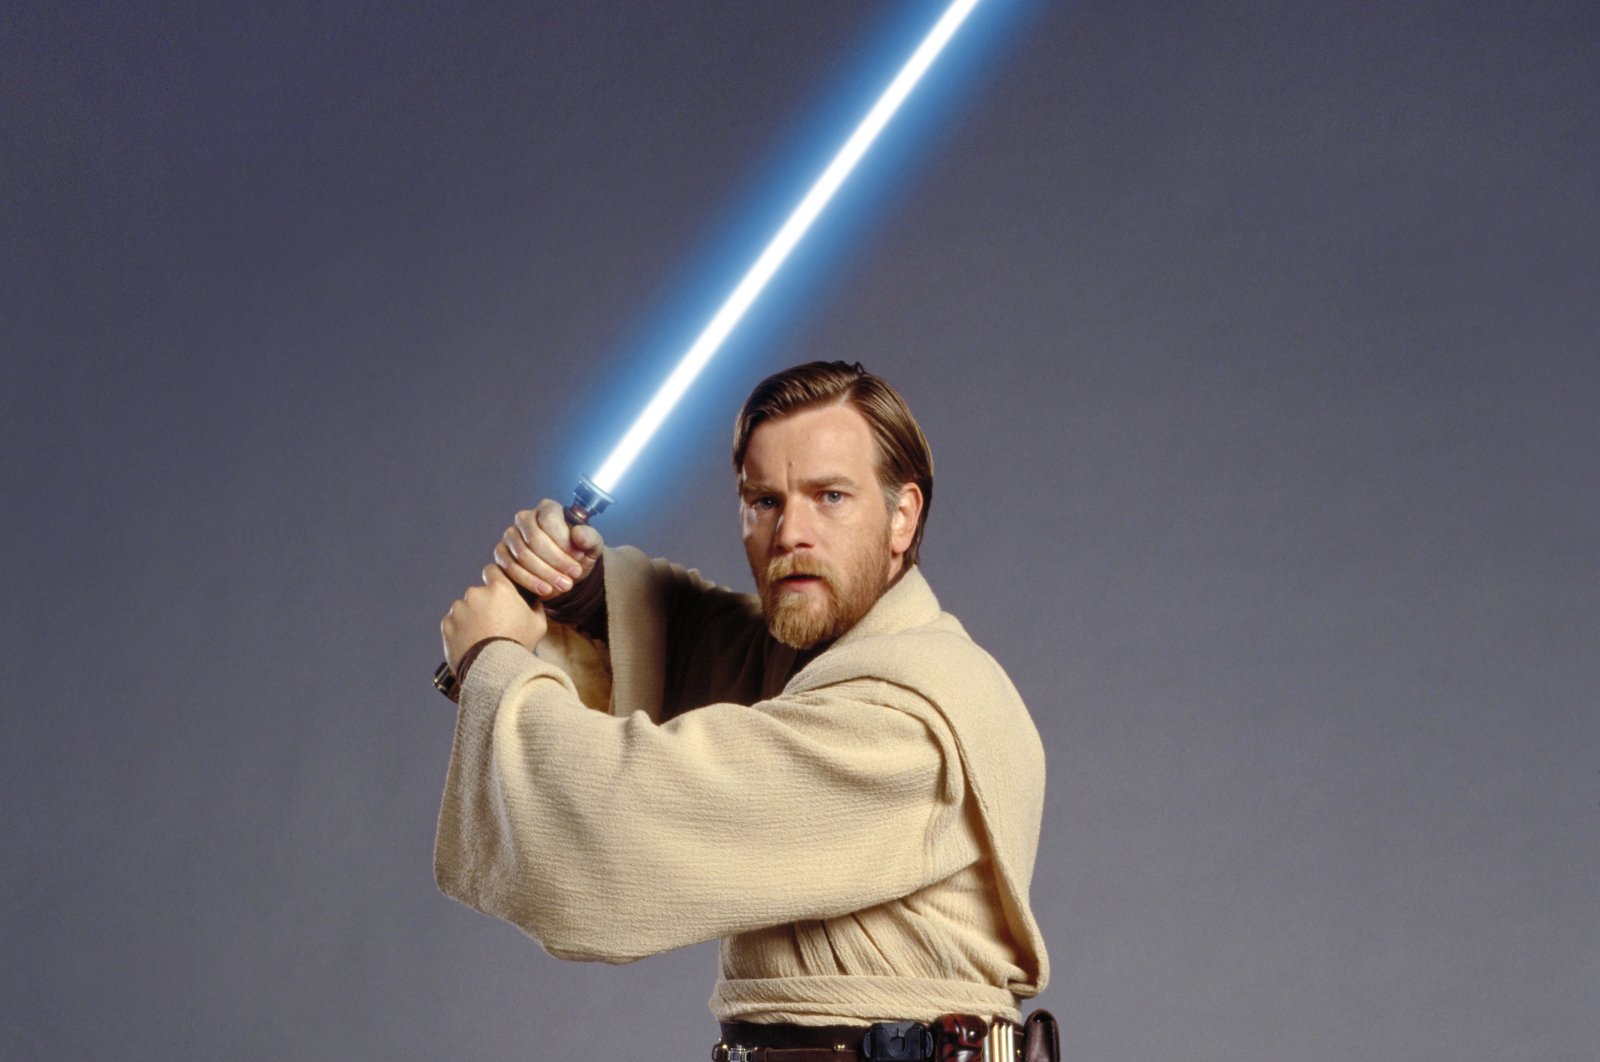 A still shot shows Ewan McGregor as Obi-Wan Kenobi.